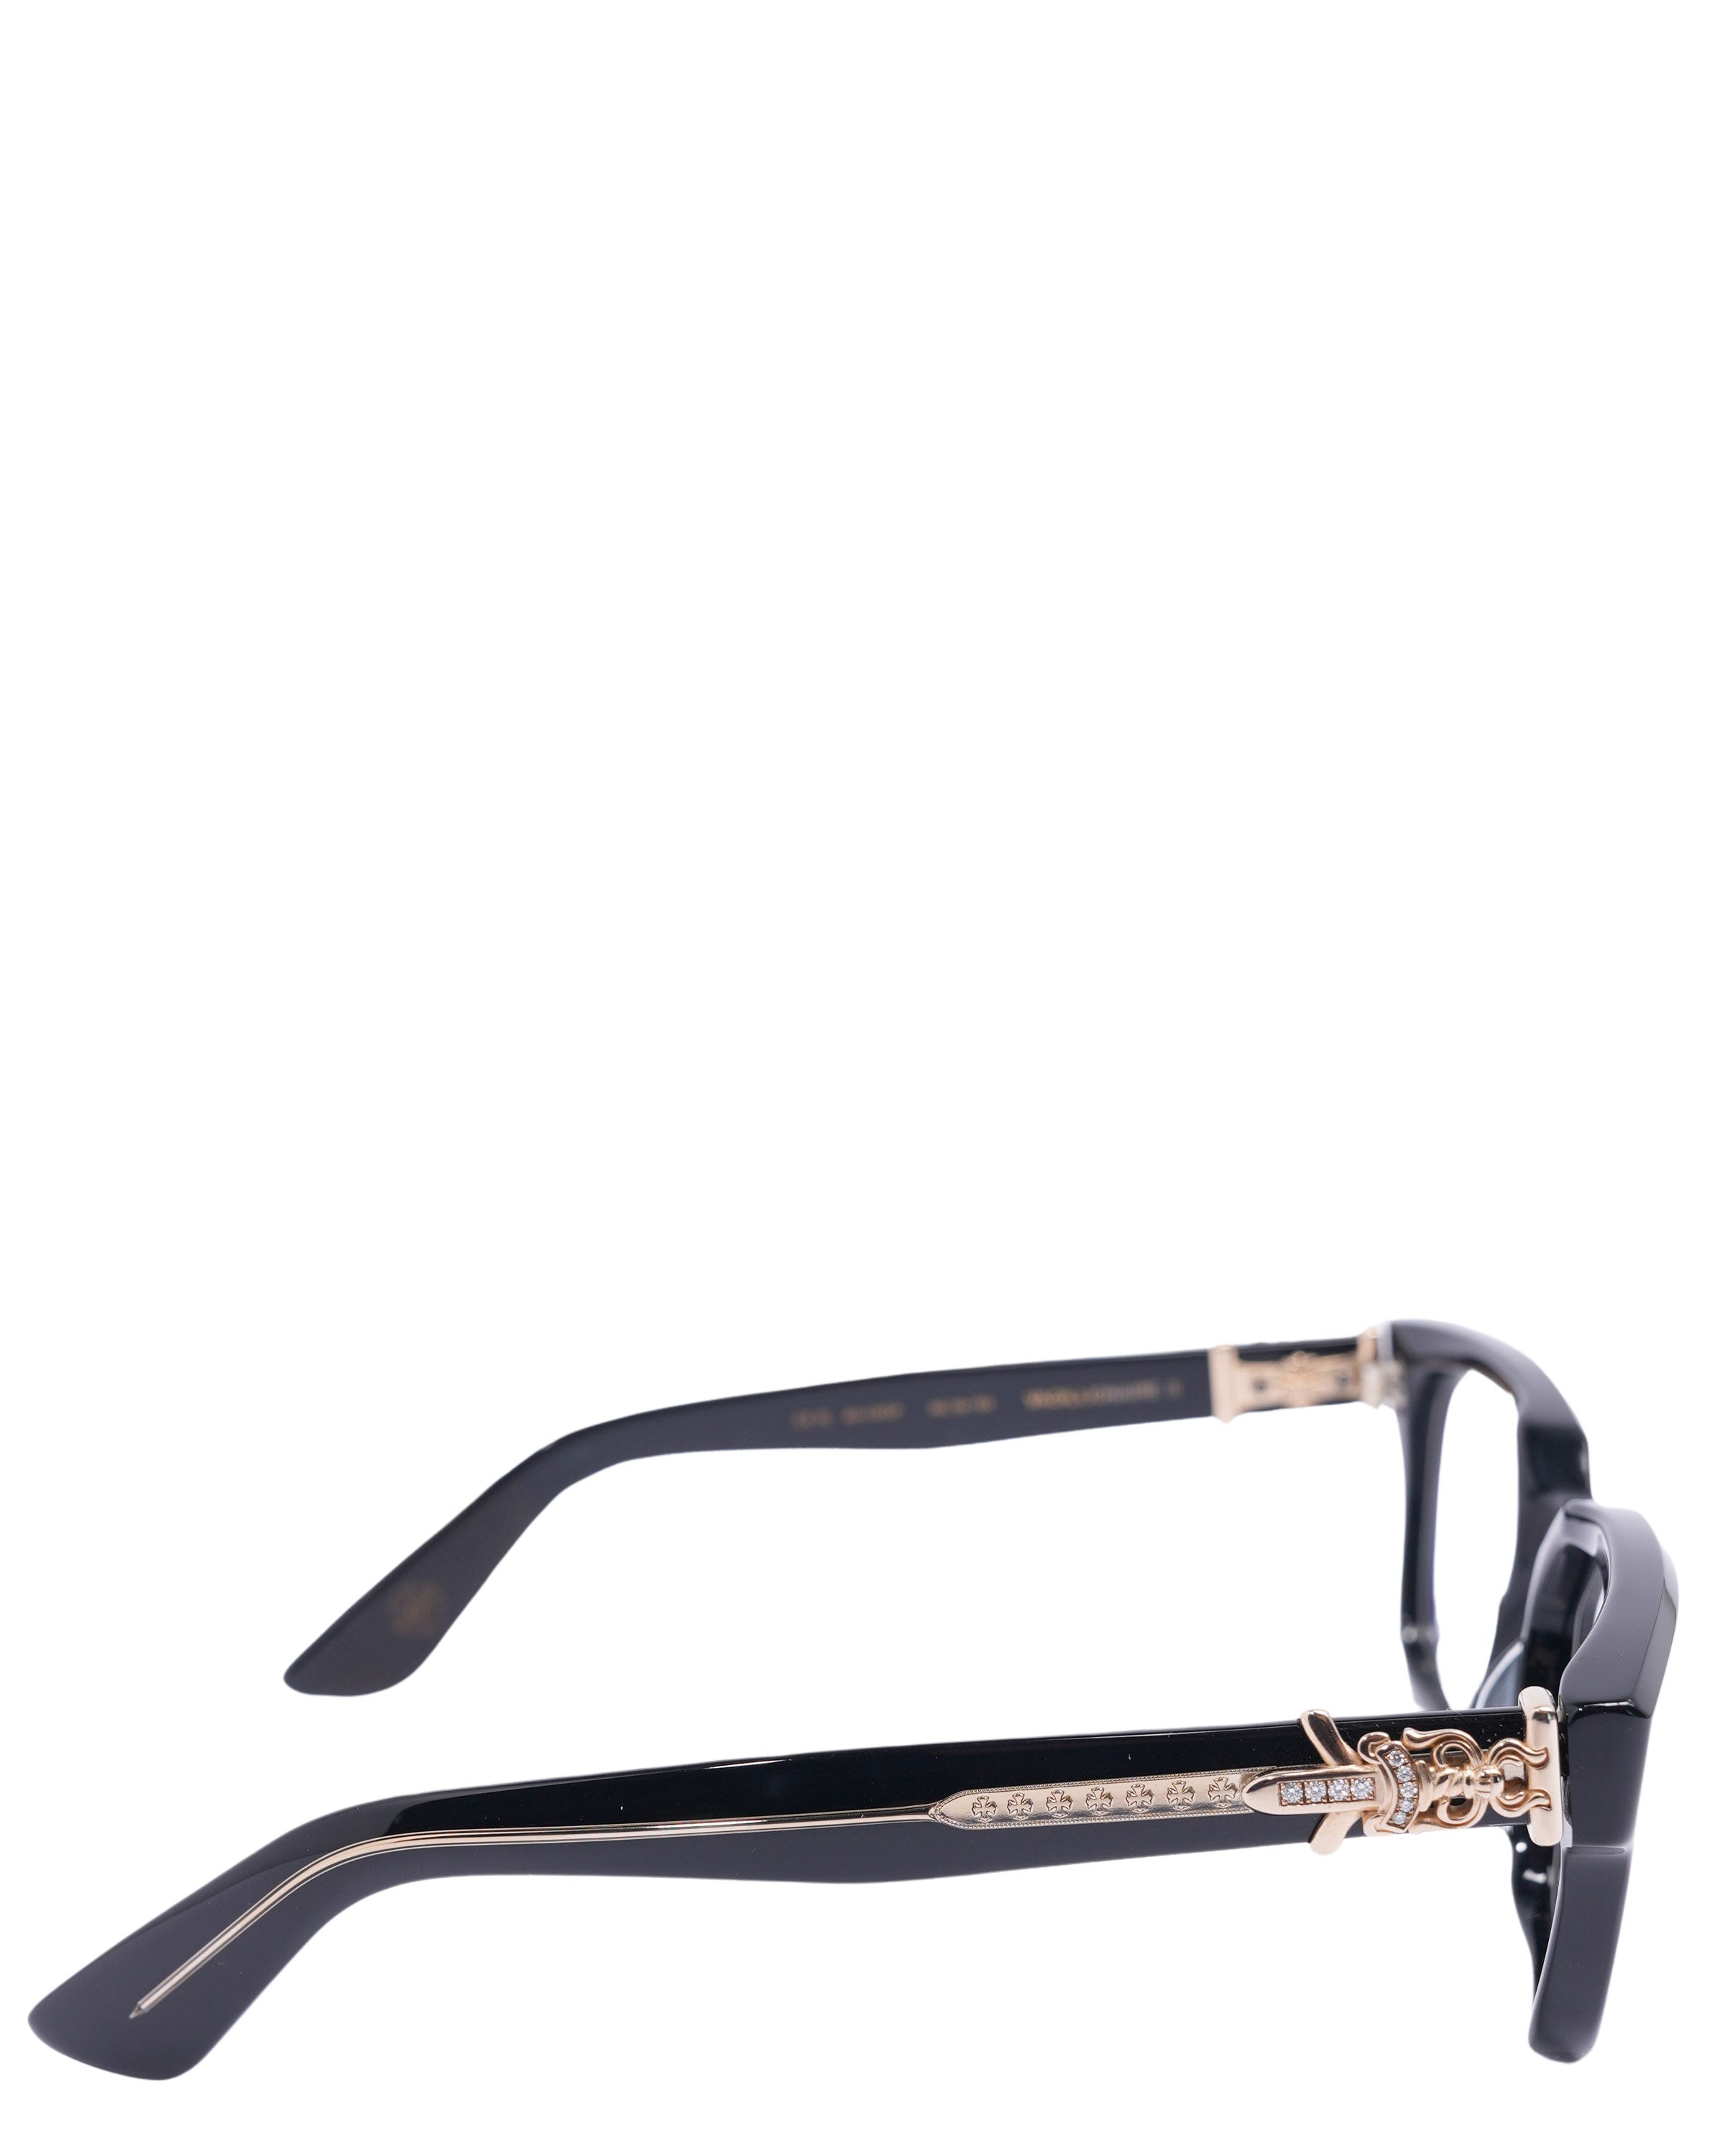 Vagillionaire II 22k Gold & Diamond Glasses